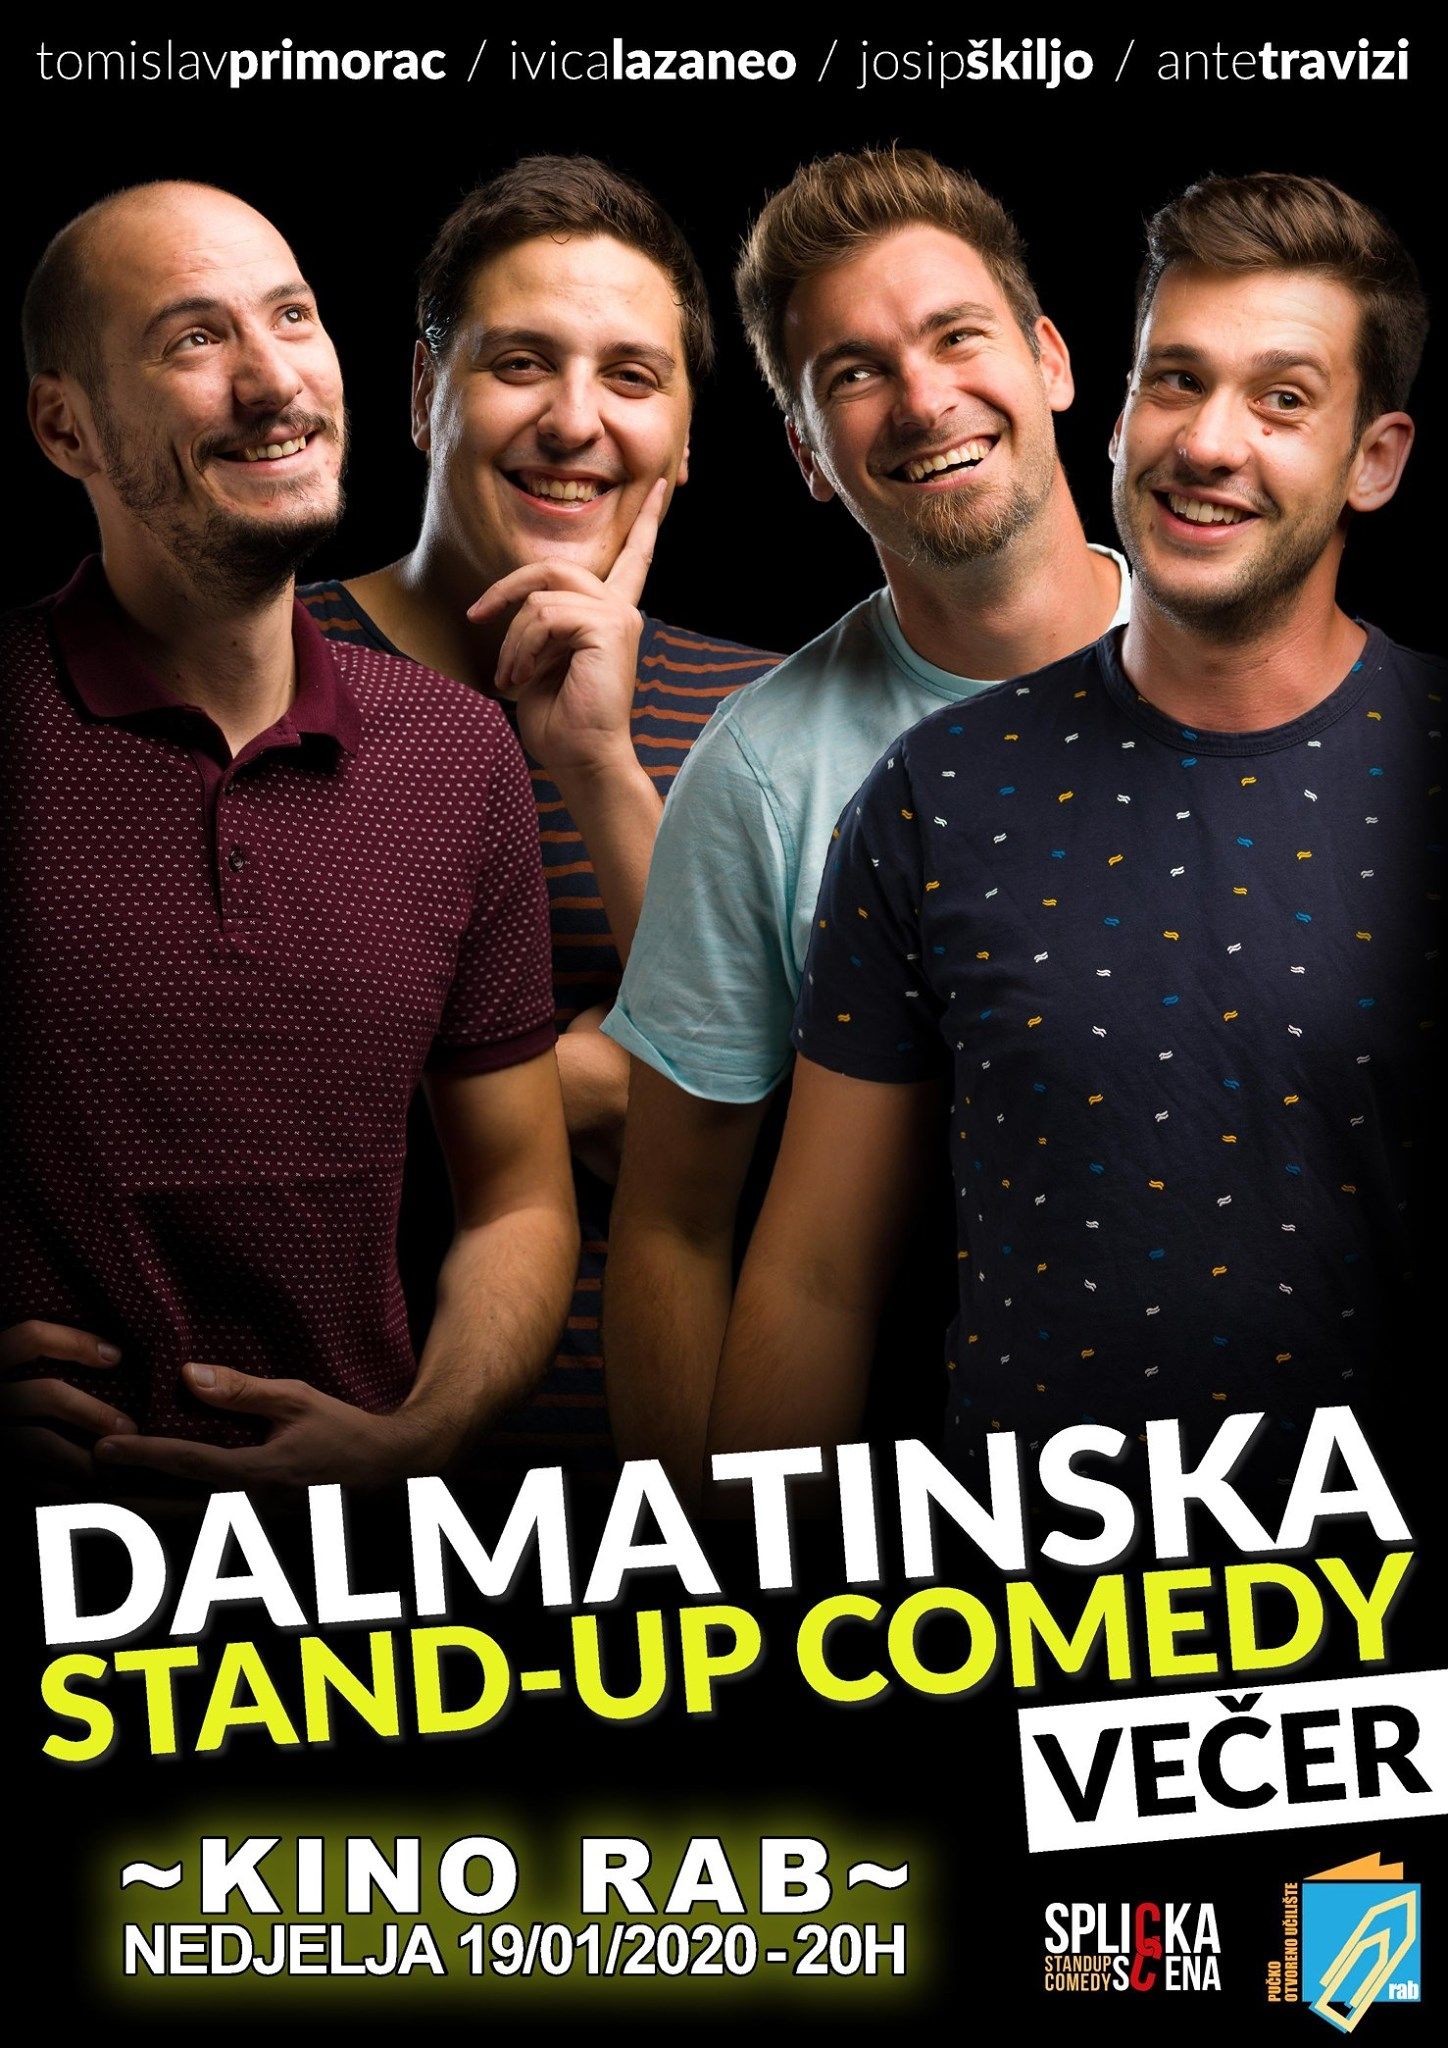 Splitski komičari na scenu Kina Rab donose “Dalmatinsku stand-up comedy večer”